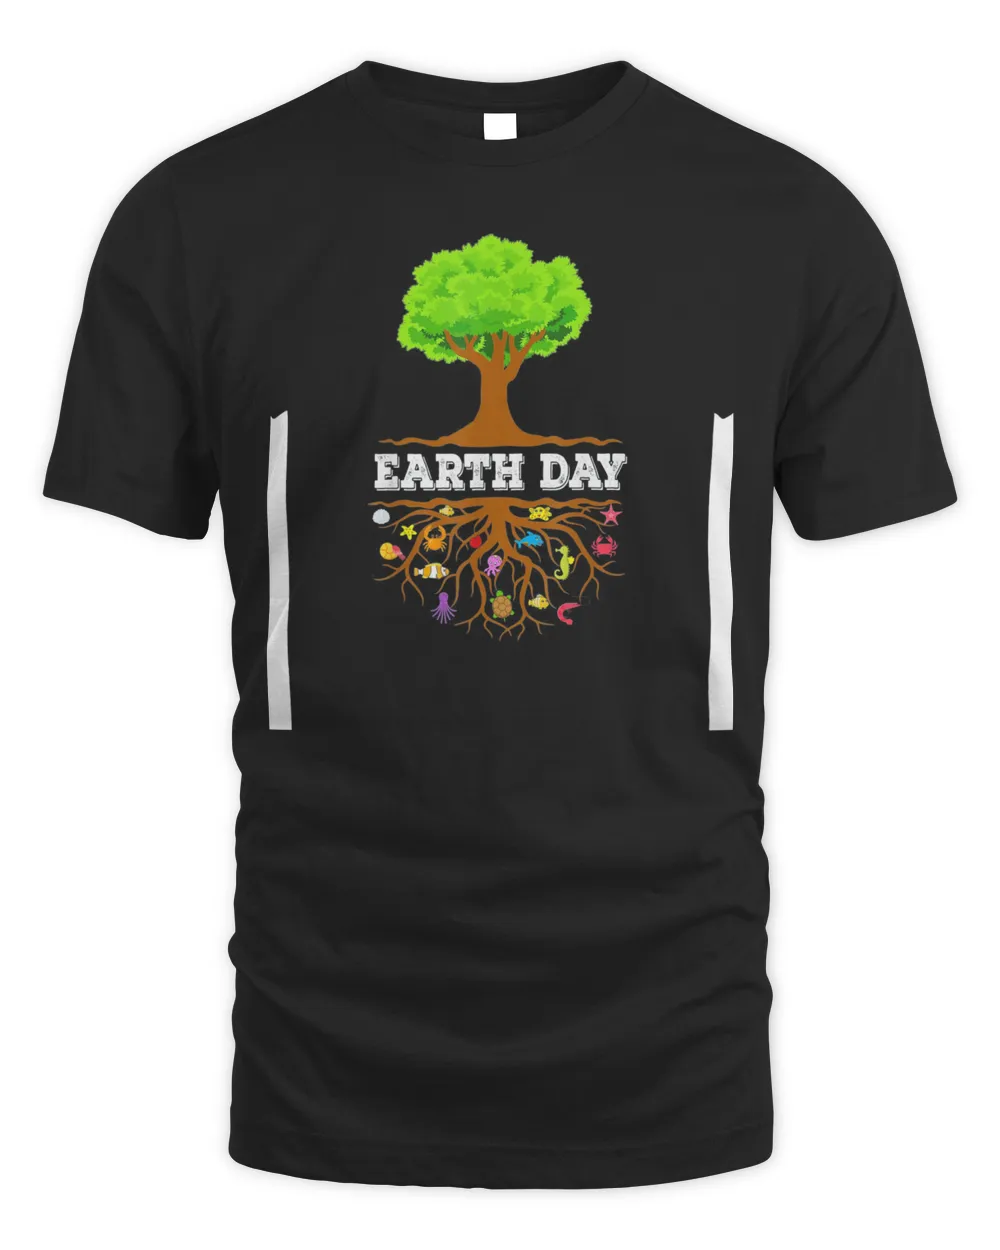 Earth Day T Shirt For Kids Women Men- Happy Earth Day